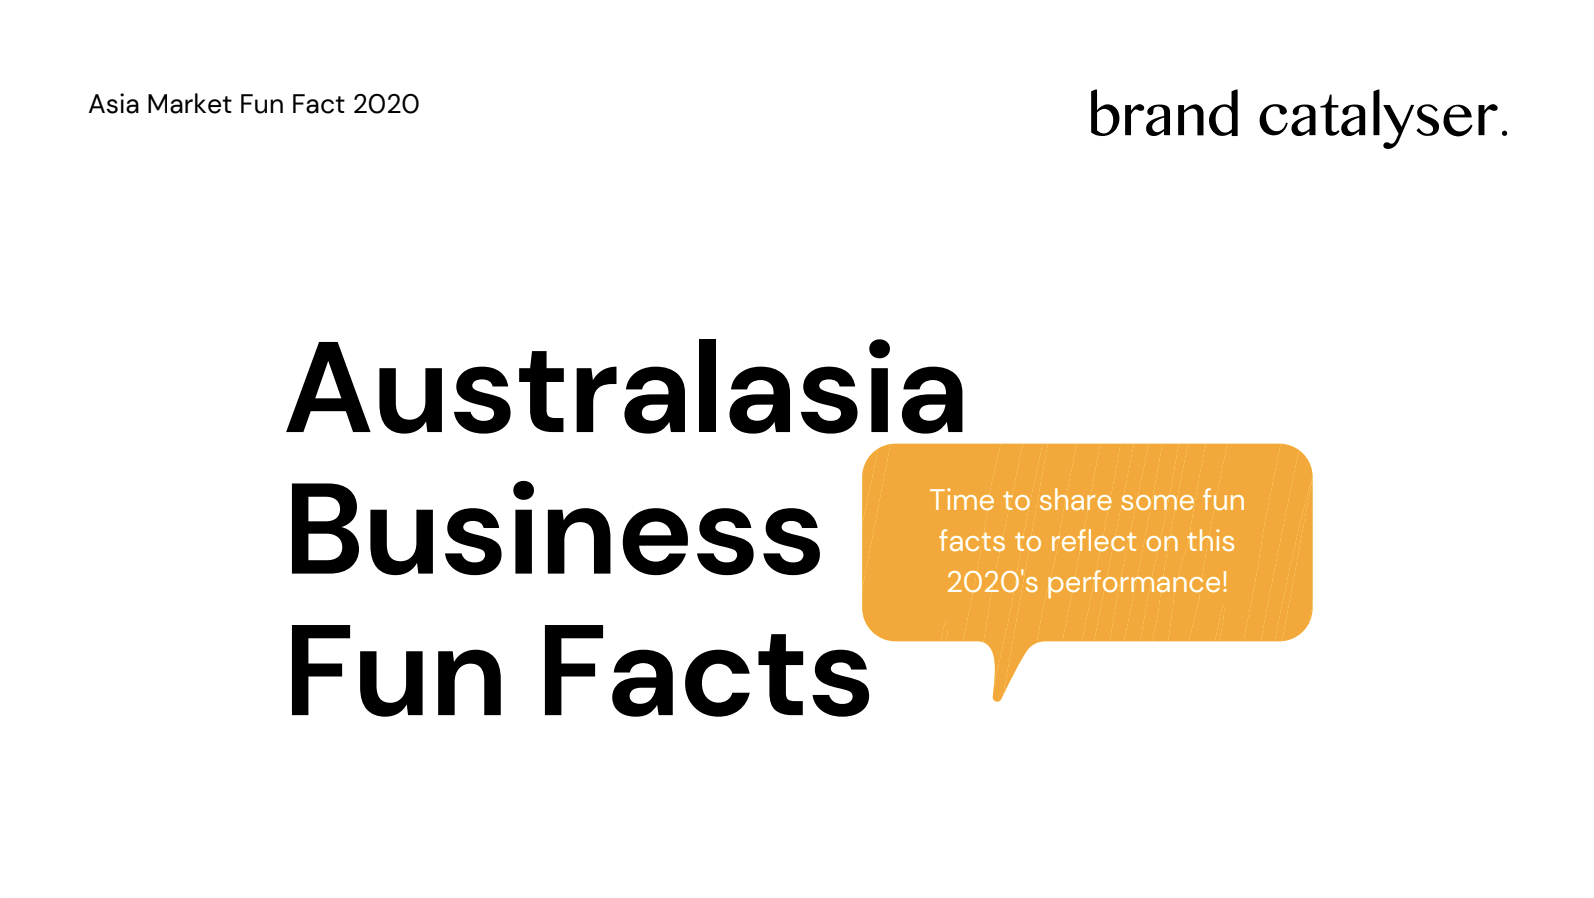 Australasia Business Fun Facts